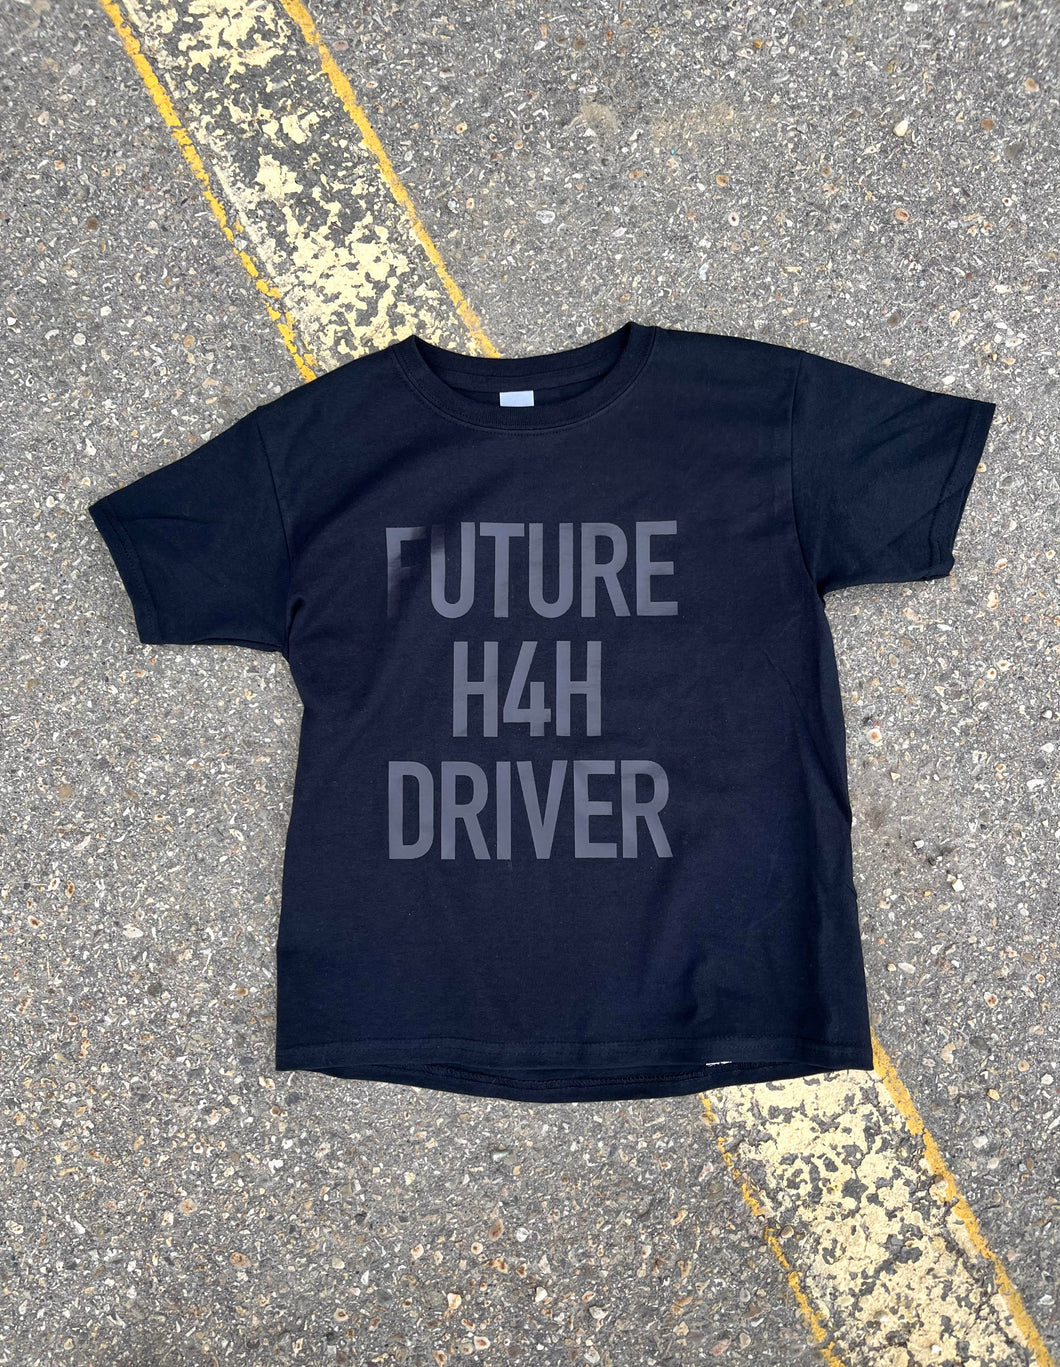 Future H4H Driver Children's T-Shirt *Black*